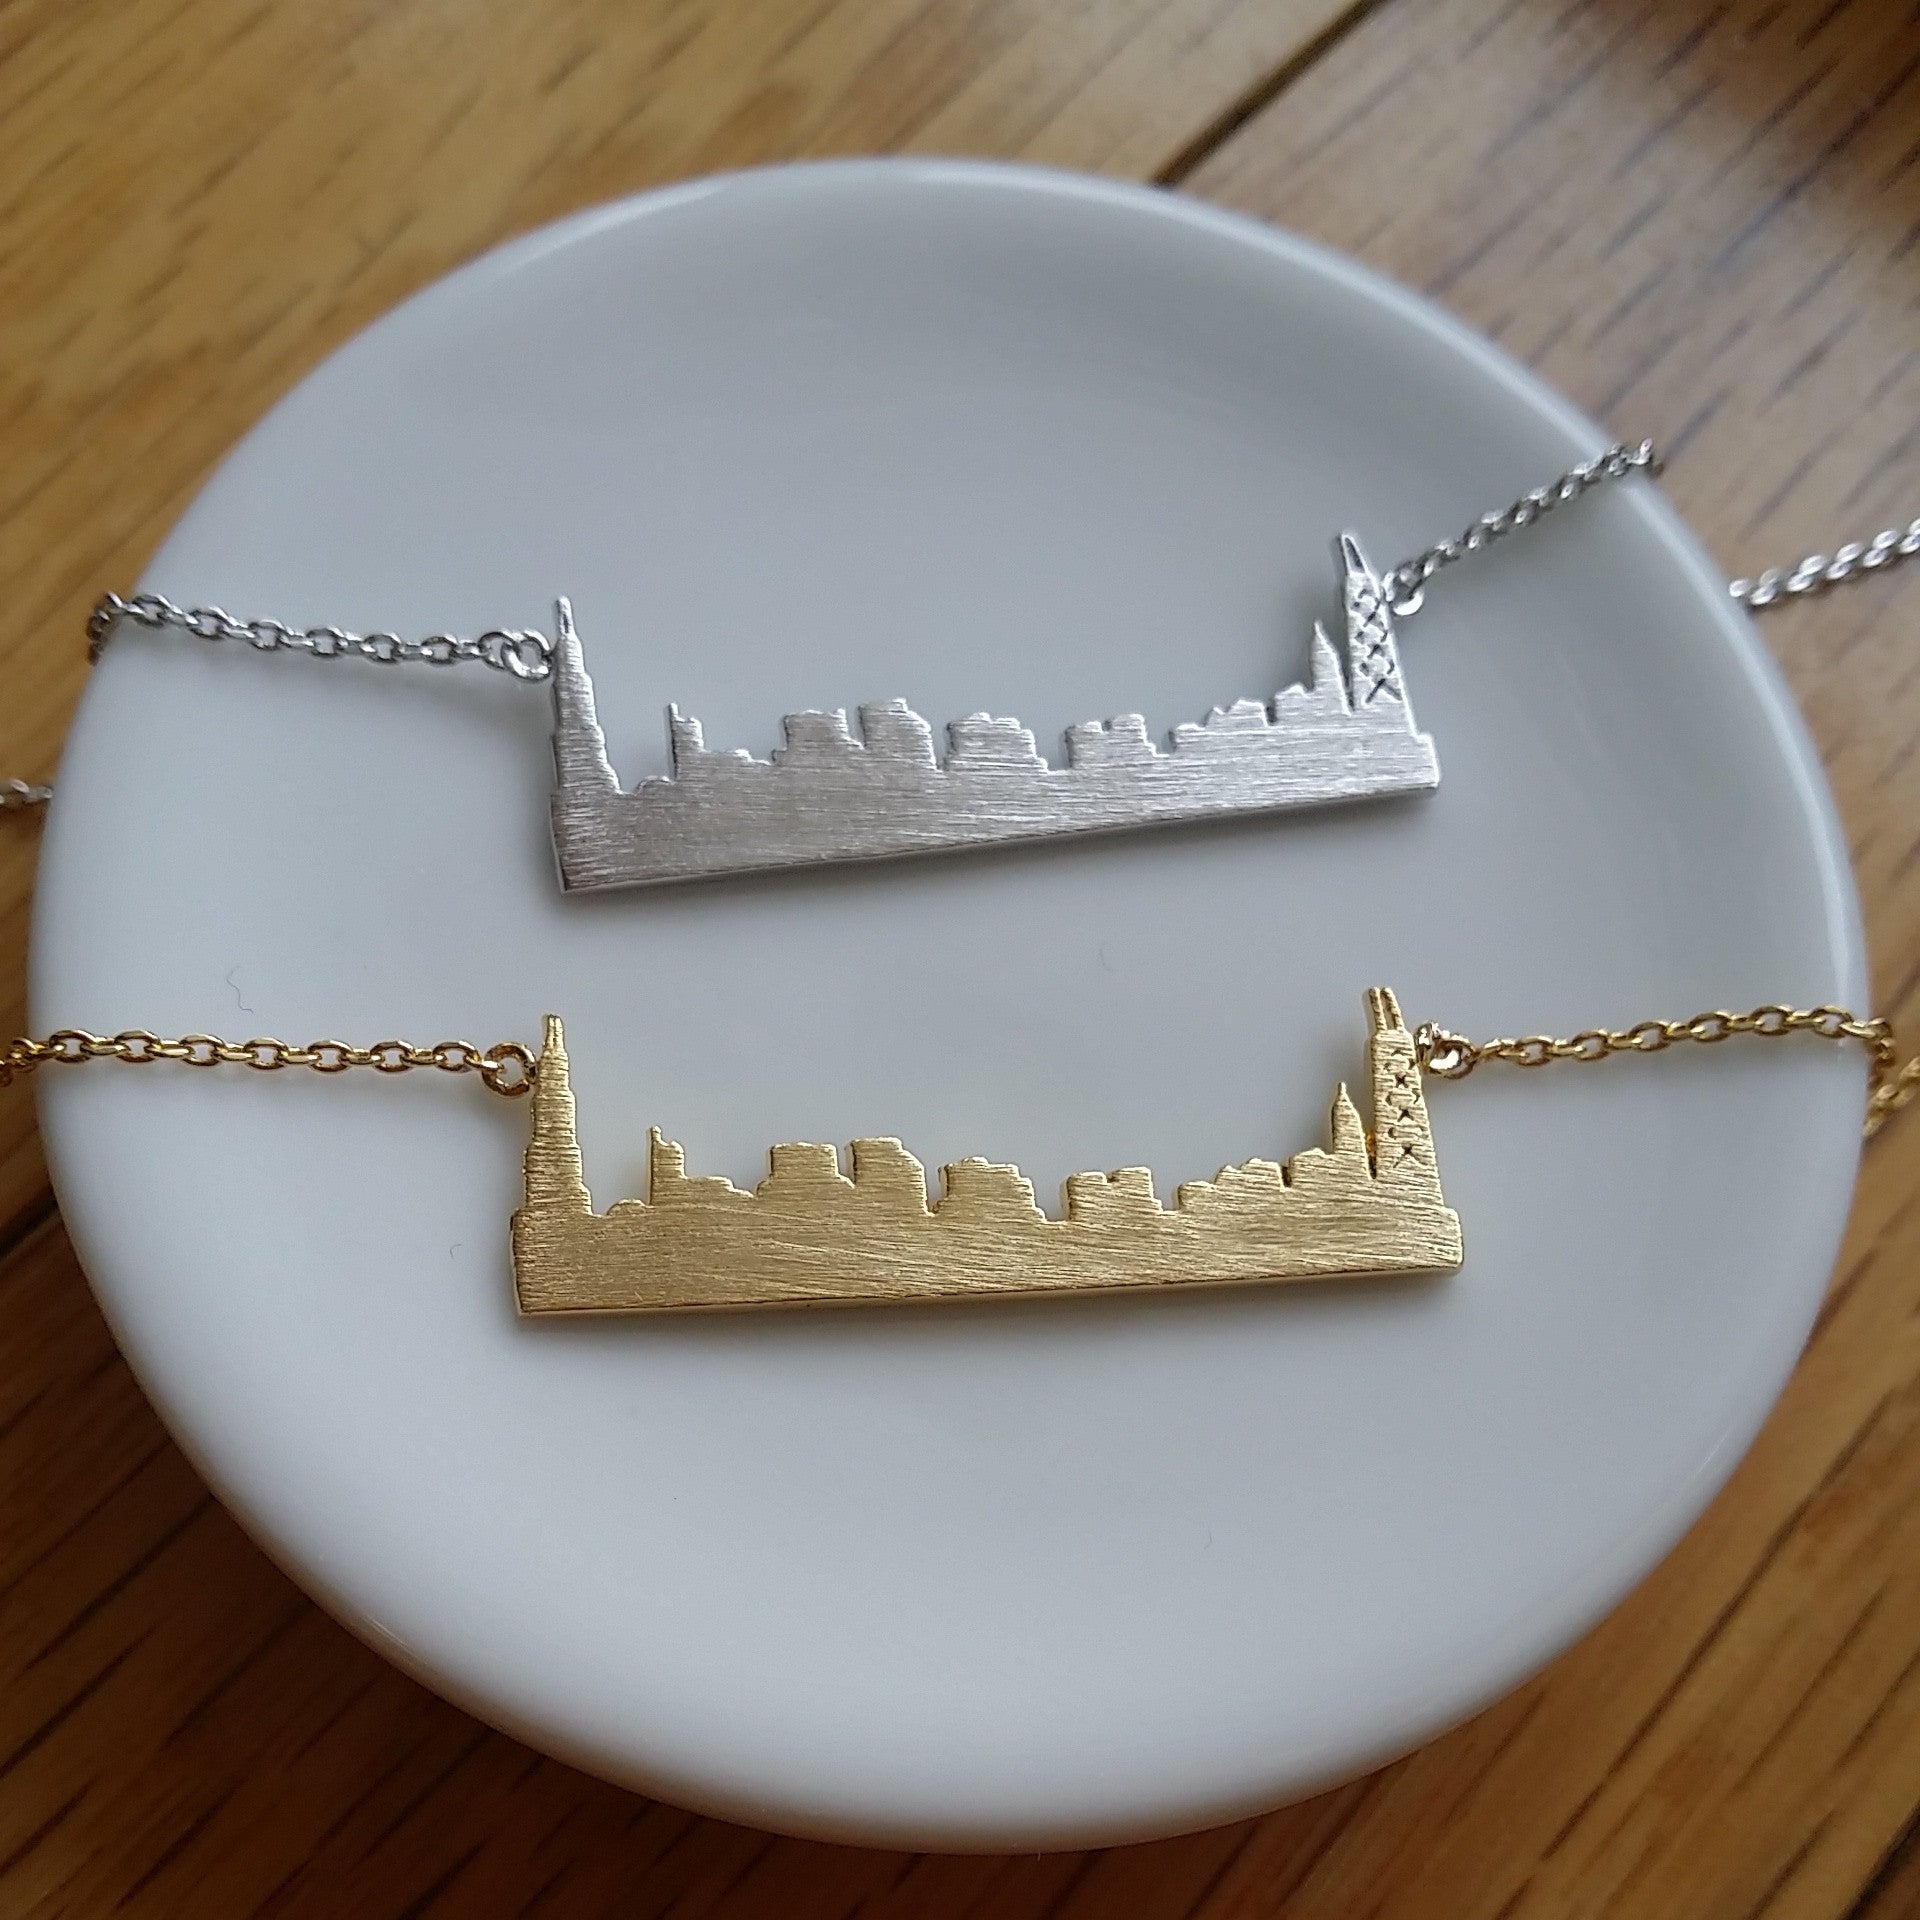 Chicago Skyline Necklace